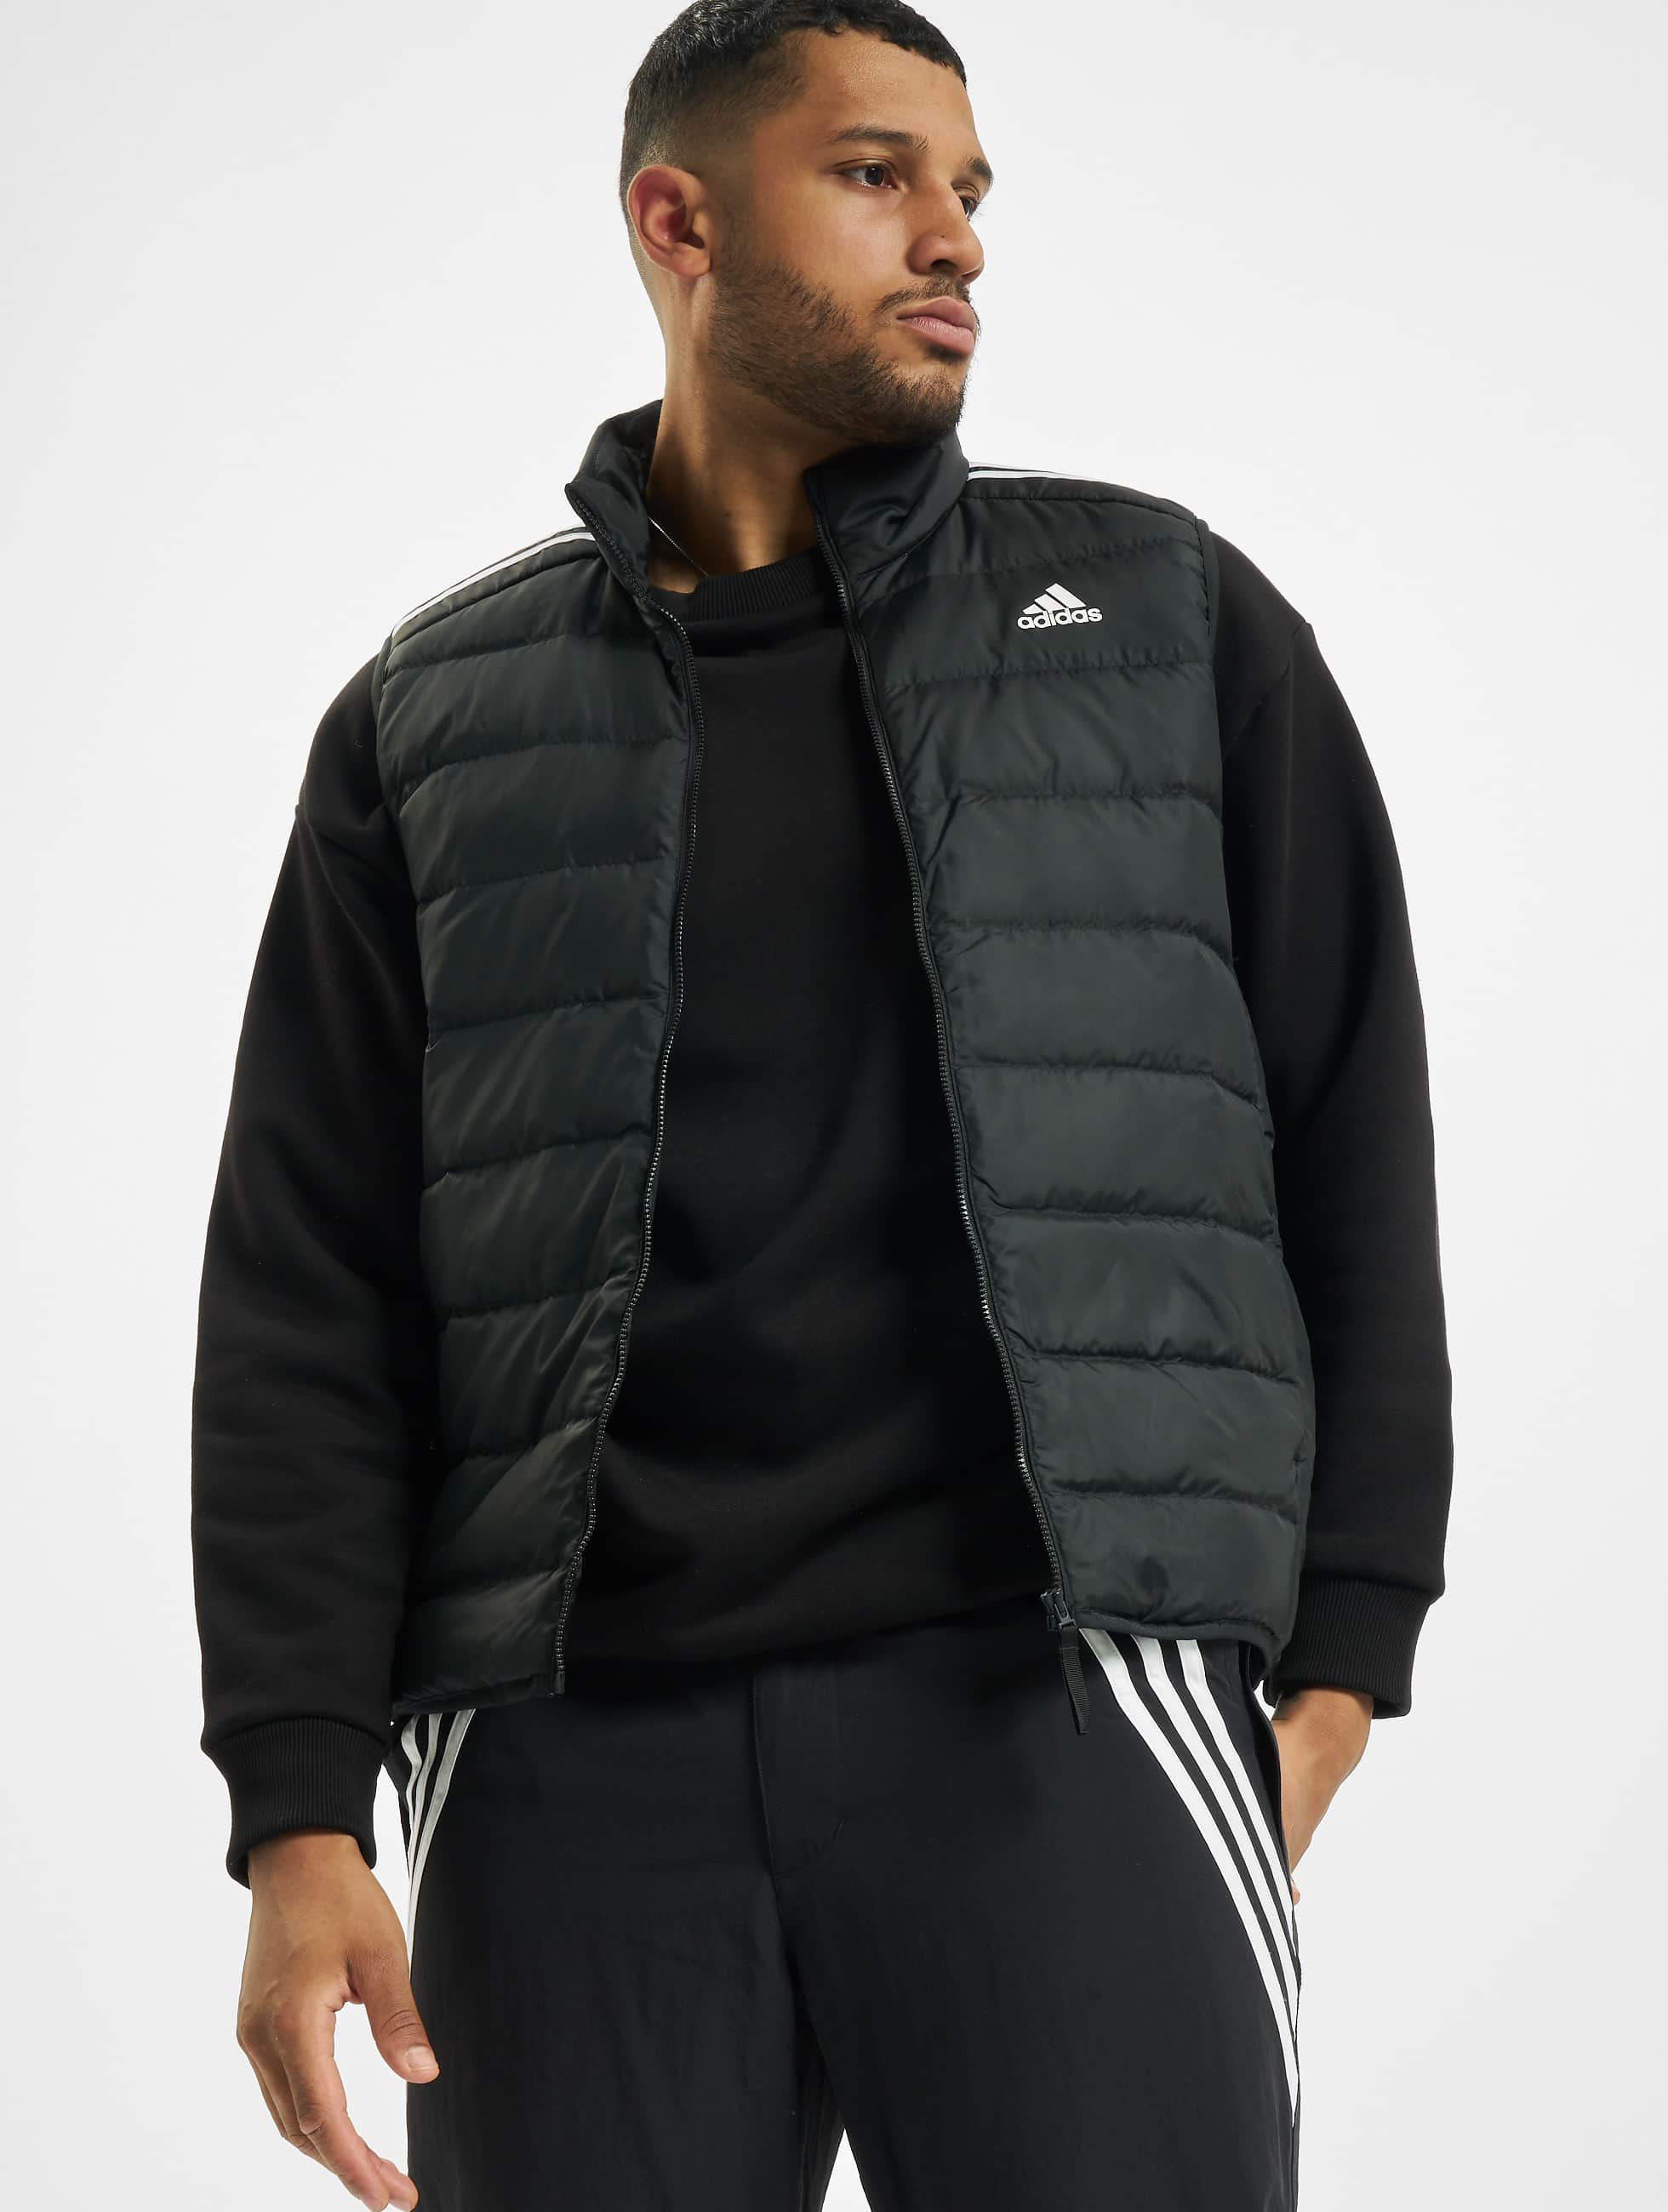 Absorberend Thuisland ethiek adidas Originals jas / Bodywarmer Ess Down in zwart 775307